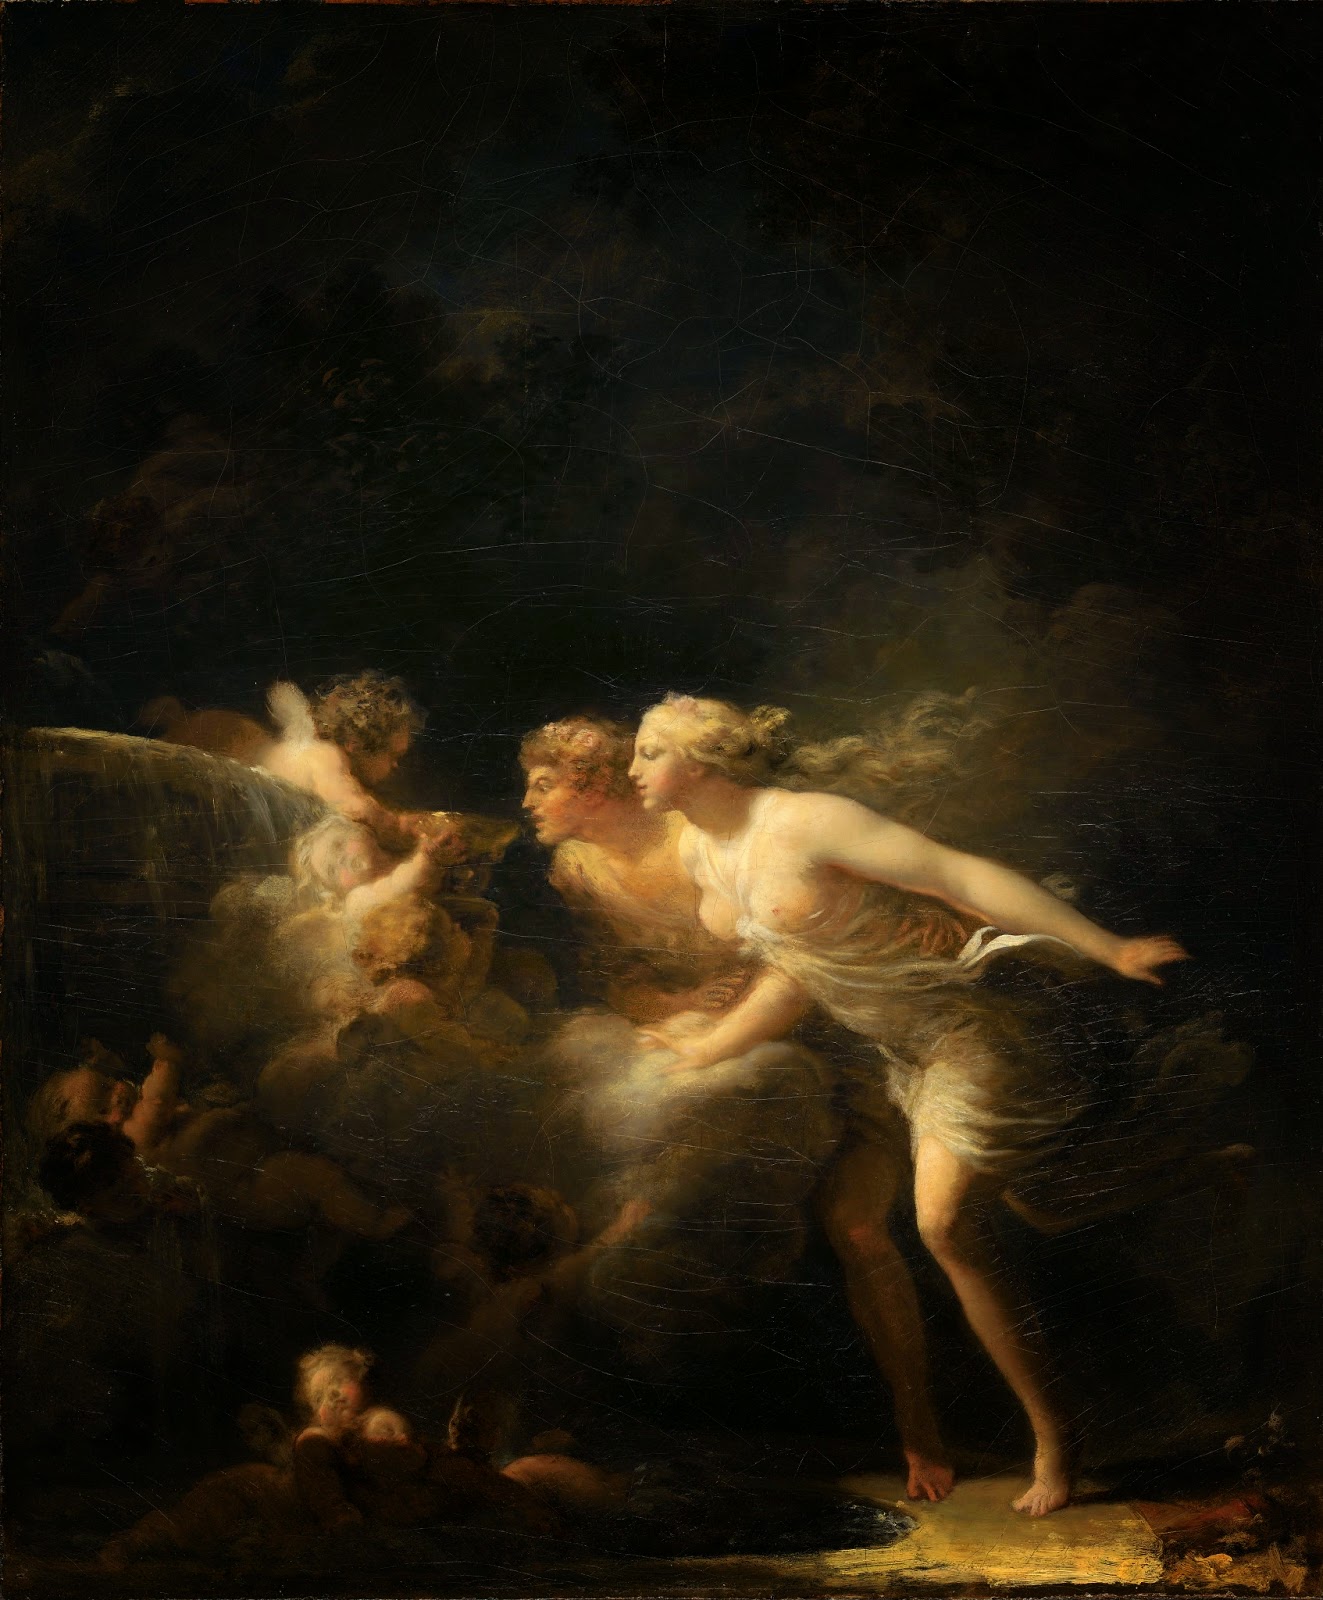 Jean+Honore+Fragonard-1732-1806 (130).jpg